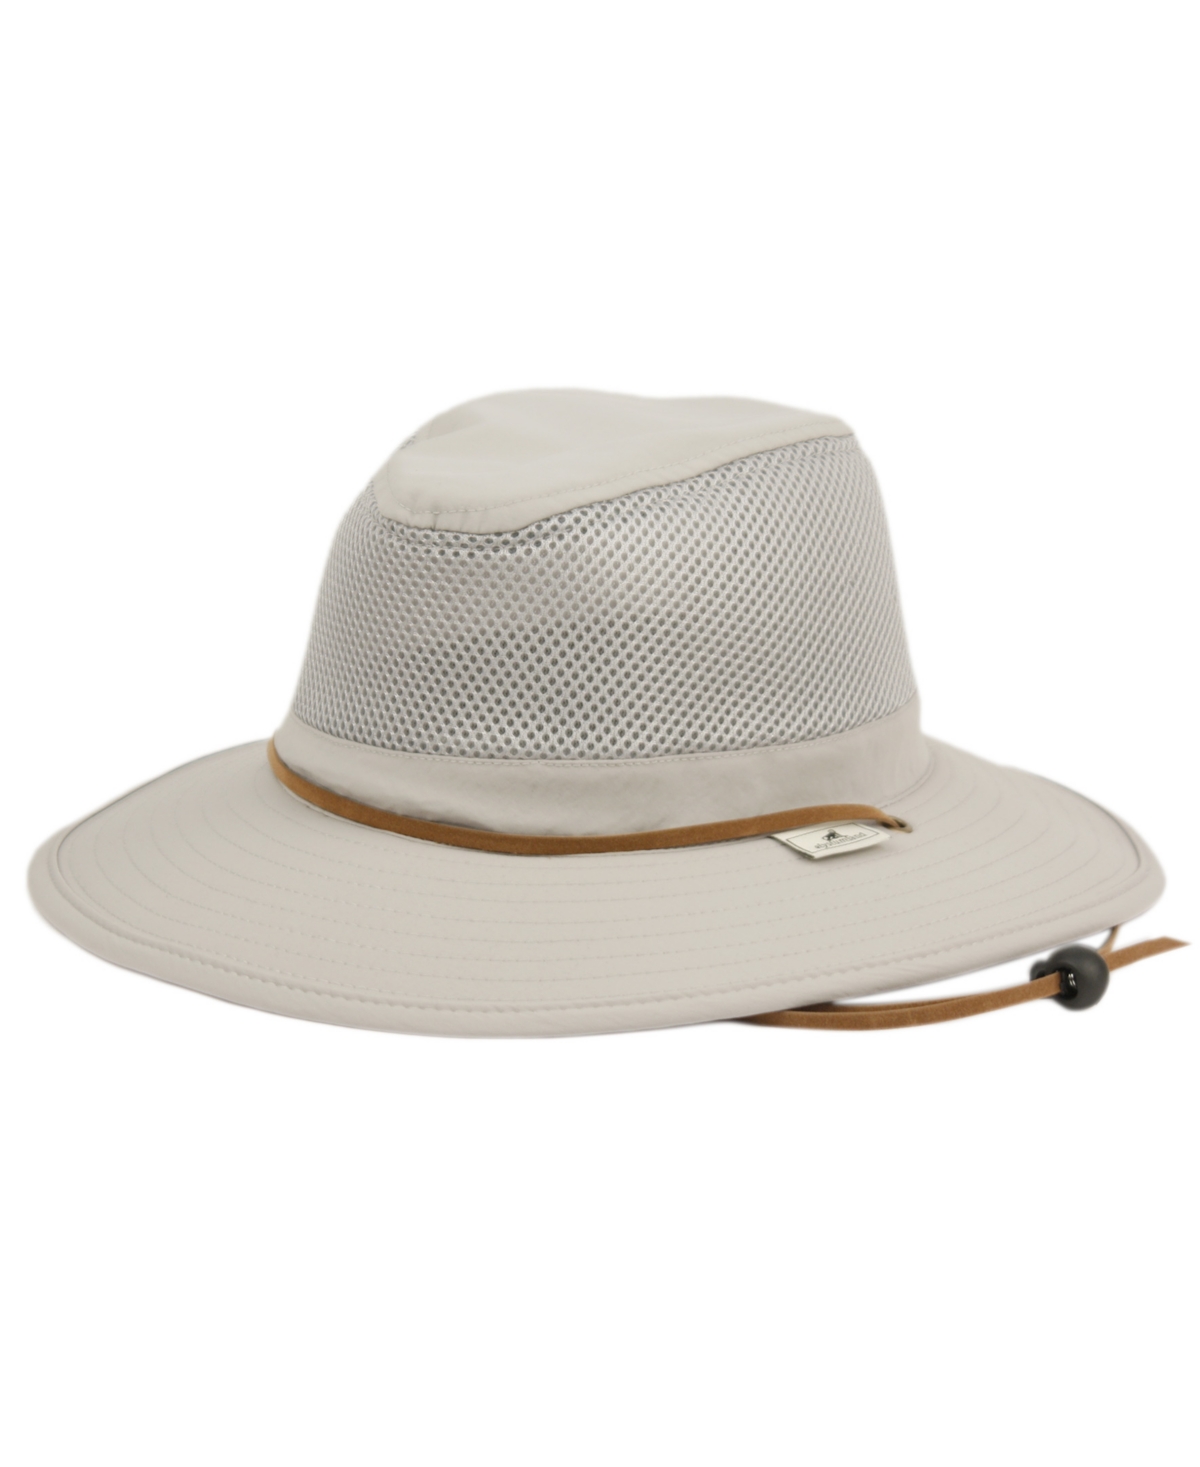 Outdoor Safari Mesh Sun Hat with Chin Cord - Gray